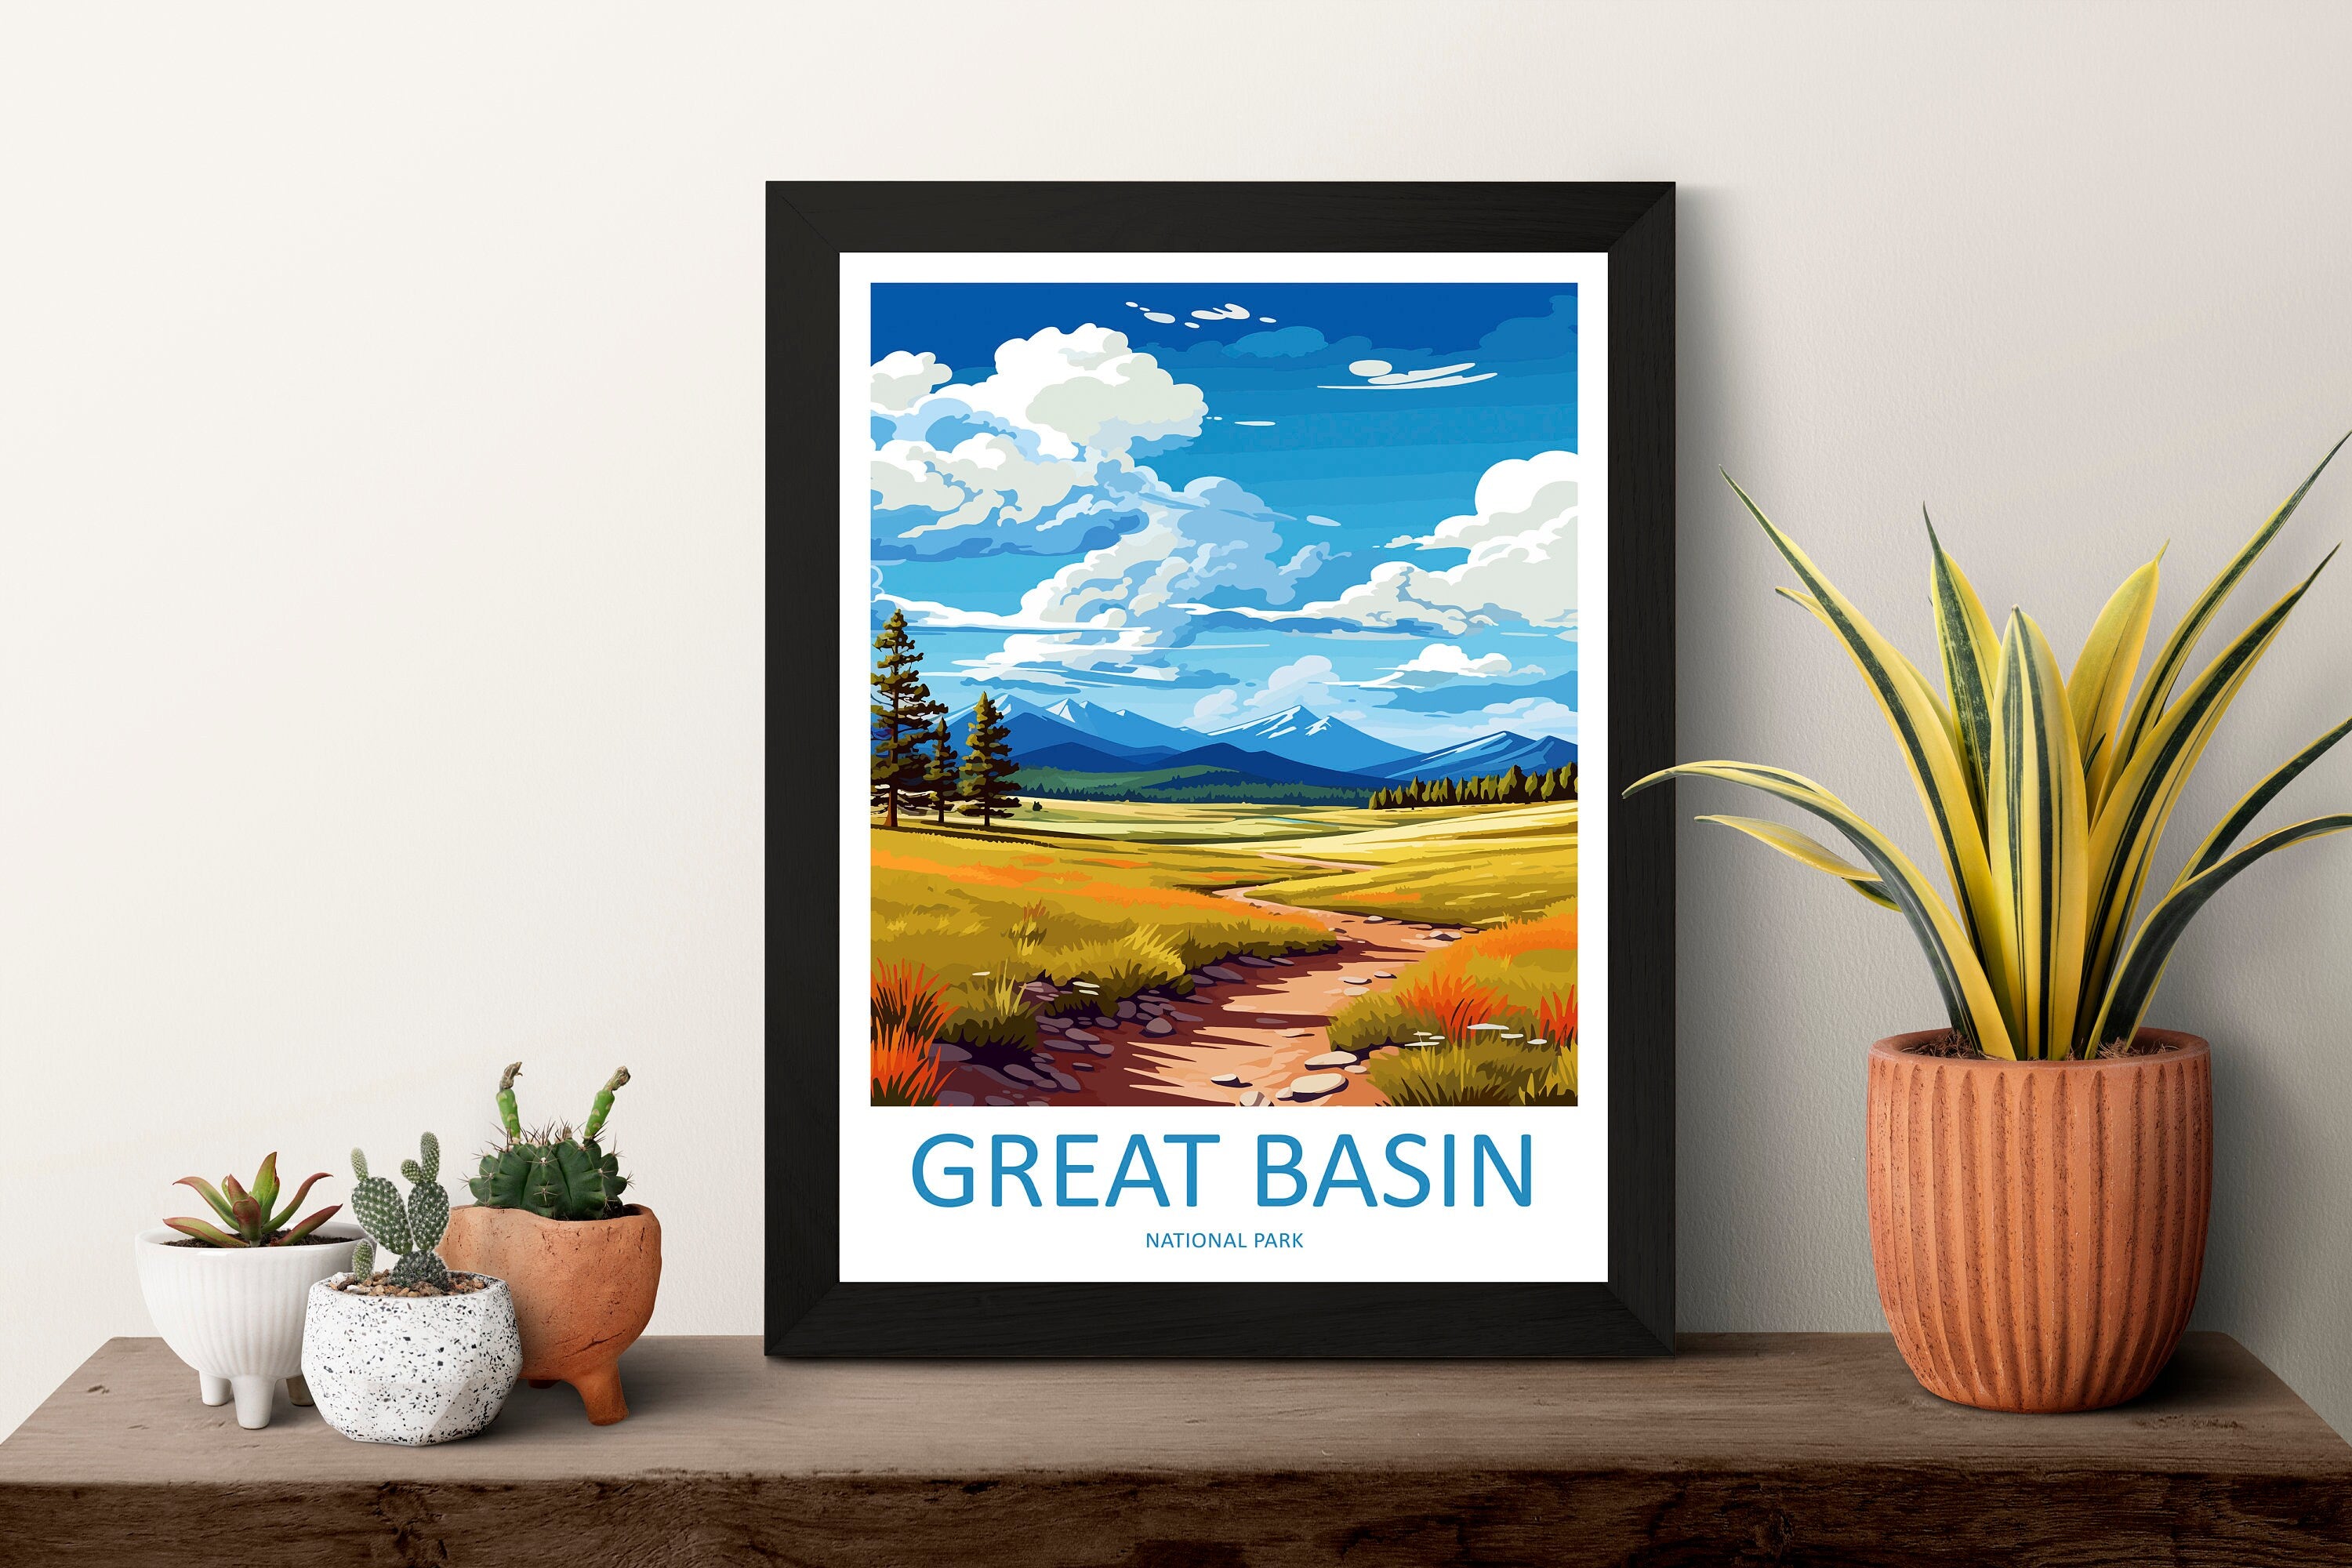 Great Basin National Park Travel Print Wall Art Great Basin National Park Wall Hanging Home Décor Great Basin National Park Gift Art